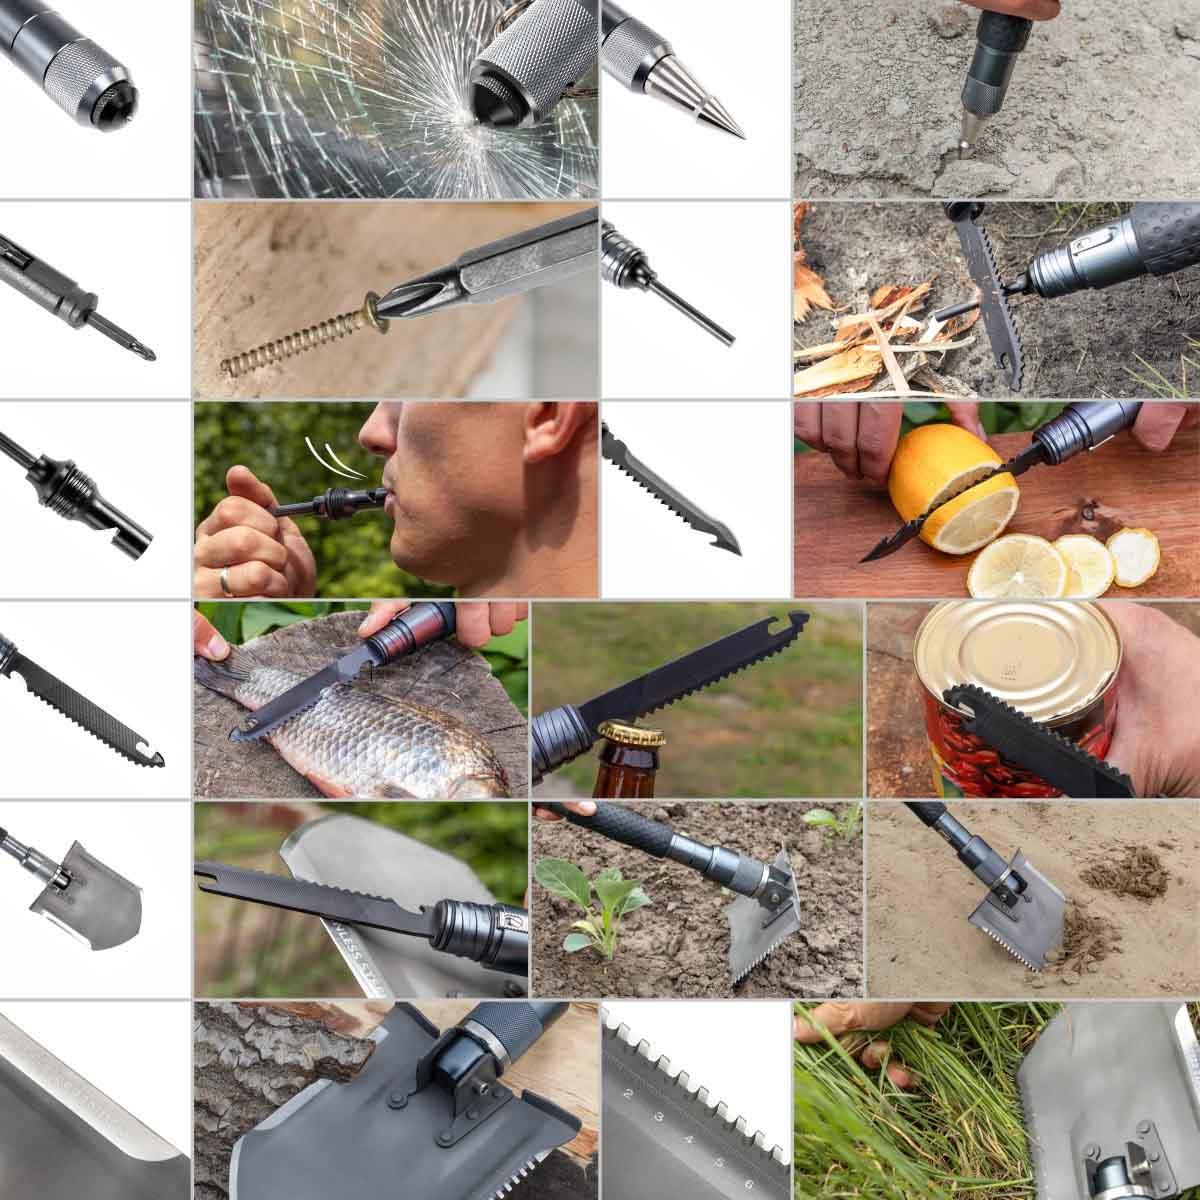 Multifunctional 35-inch Assembling Survival Shovel Kit for Fishing, Hunting, Outdoor